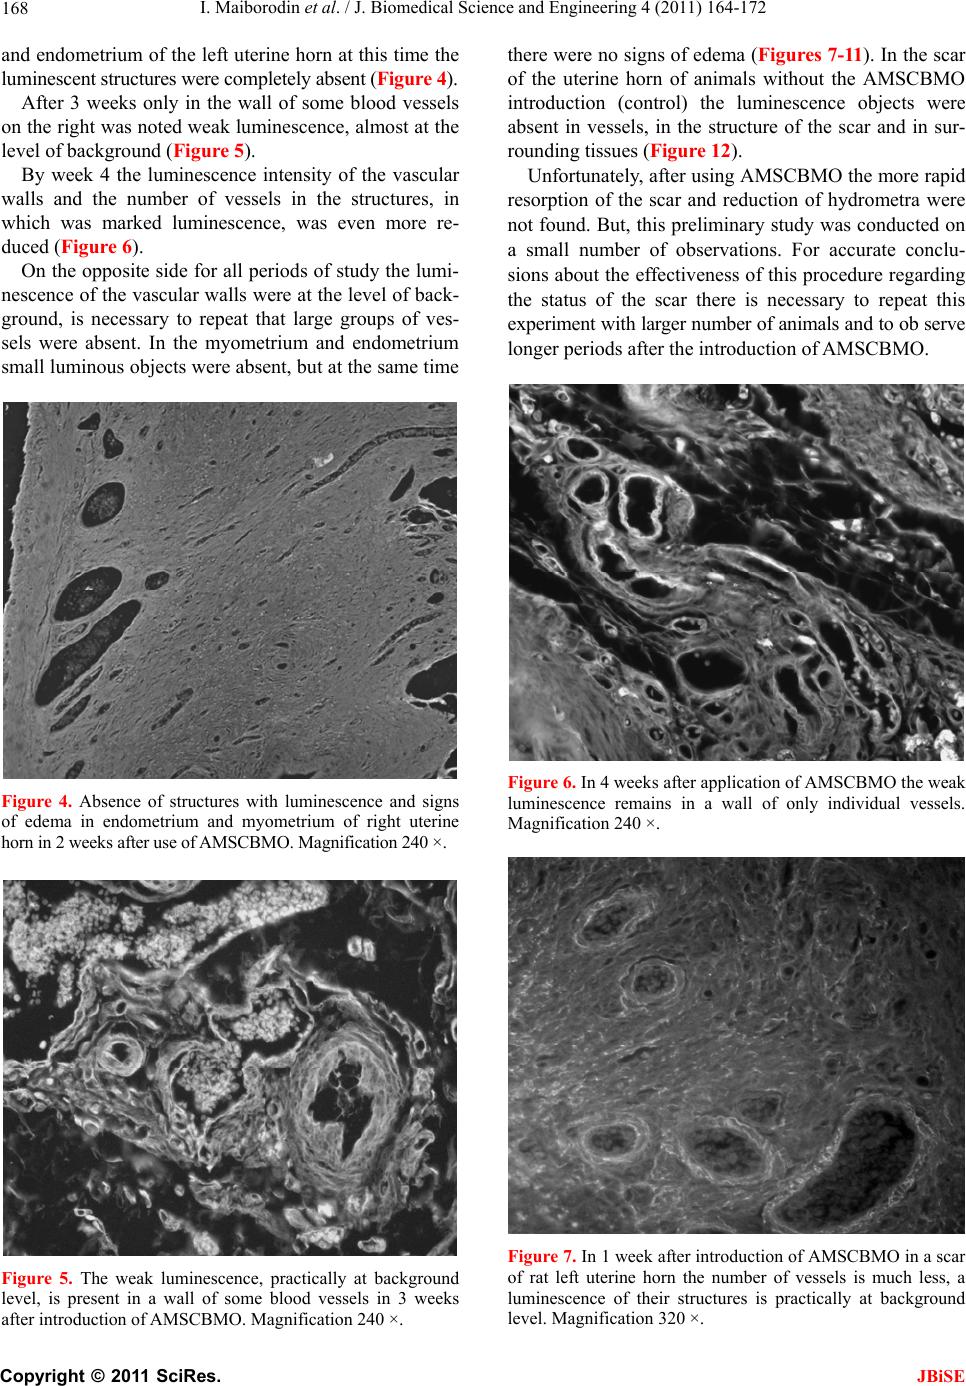 Angiogenesis in Rat Uterine Scar after Introduction af ...